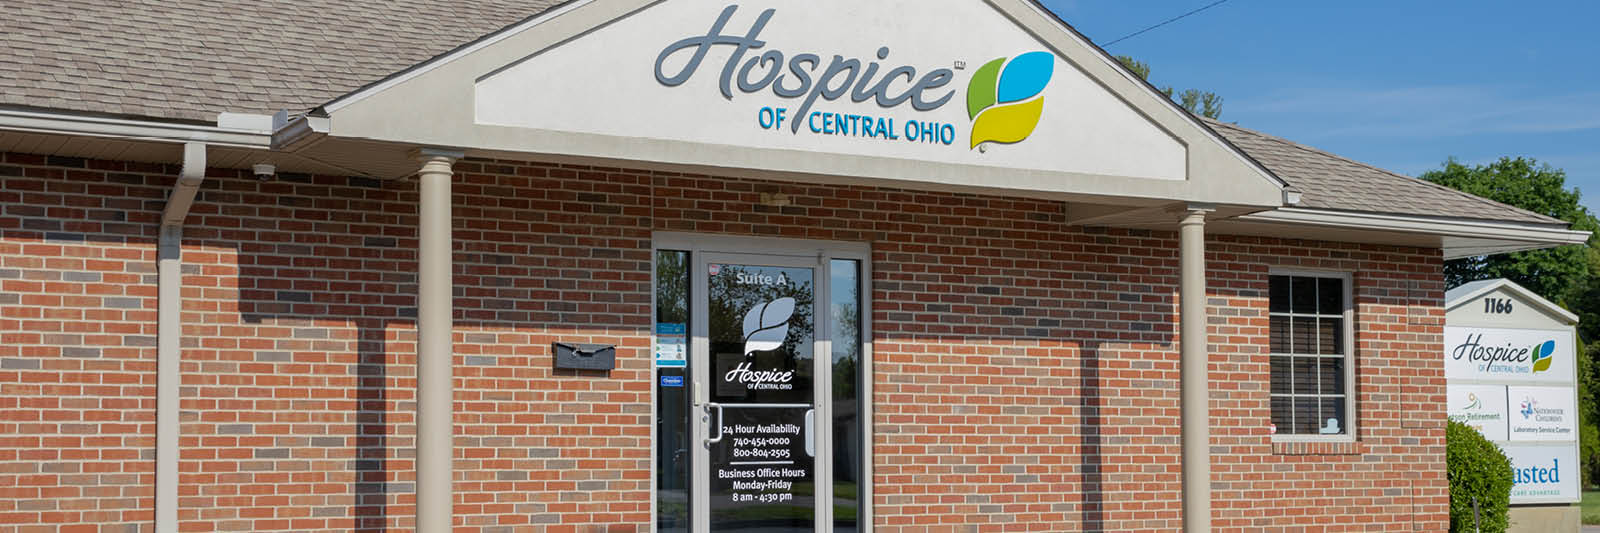 Ohio's Hospice of Central Ohio